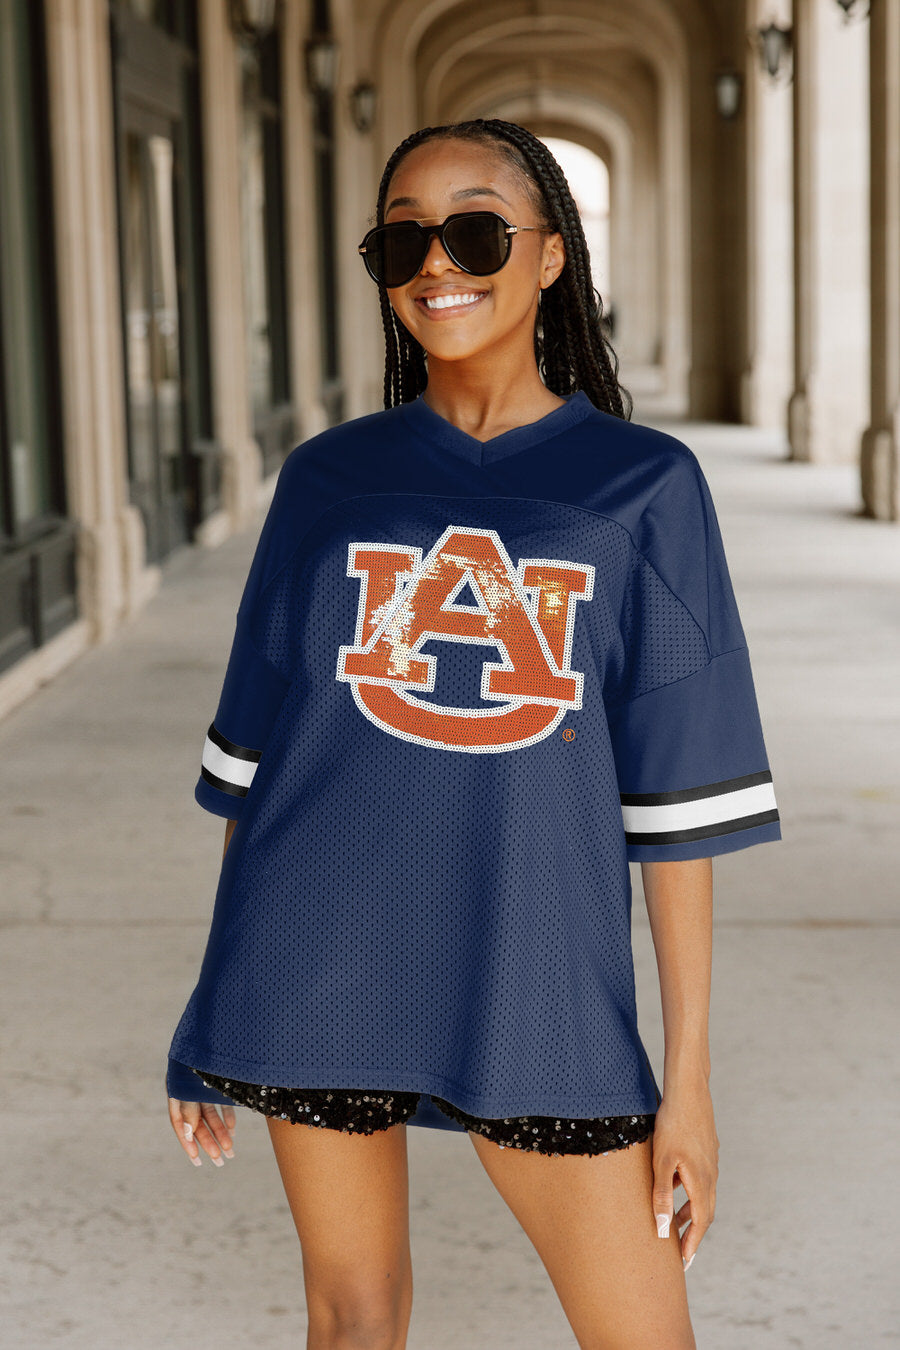 GC Auburn Tigers Rookie Move Iconic Oversized Fashion Jersey